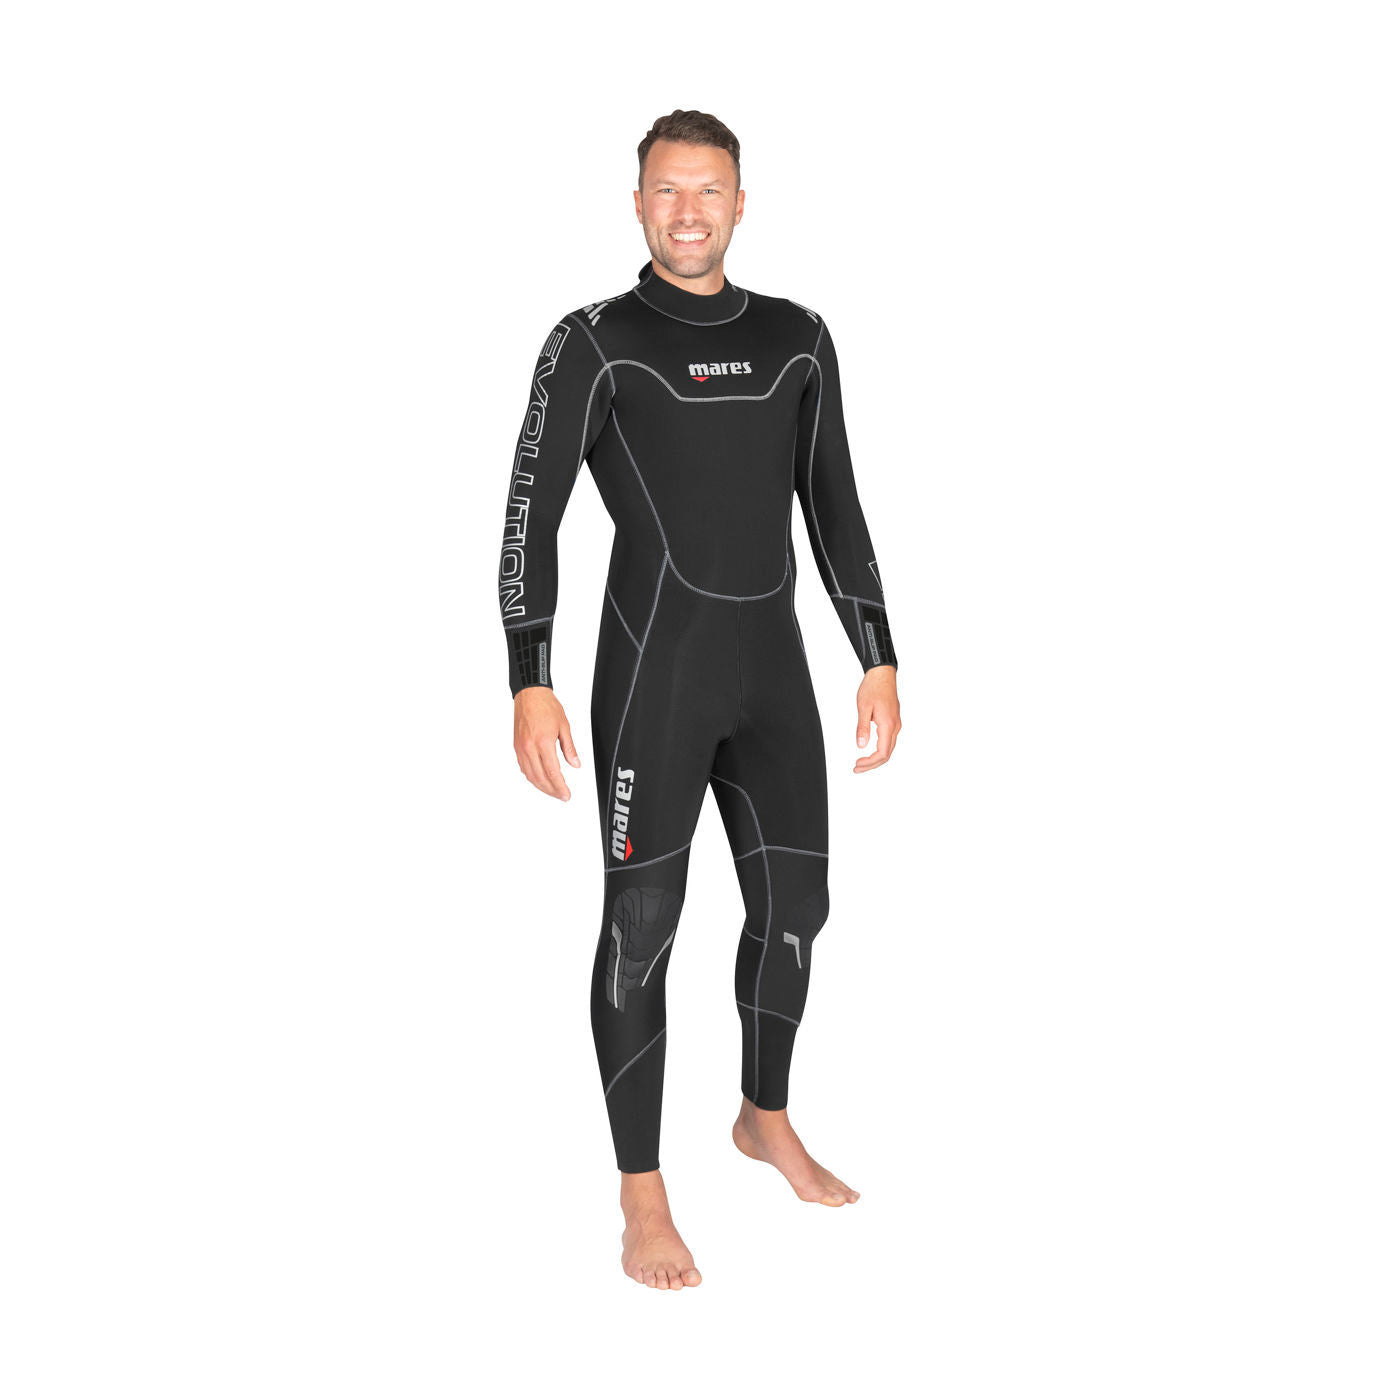 Evolution 5 mm wetsuit